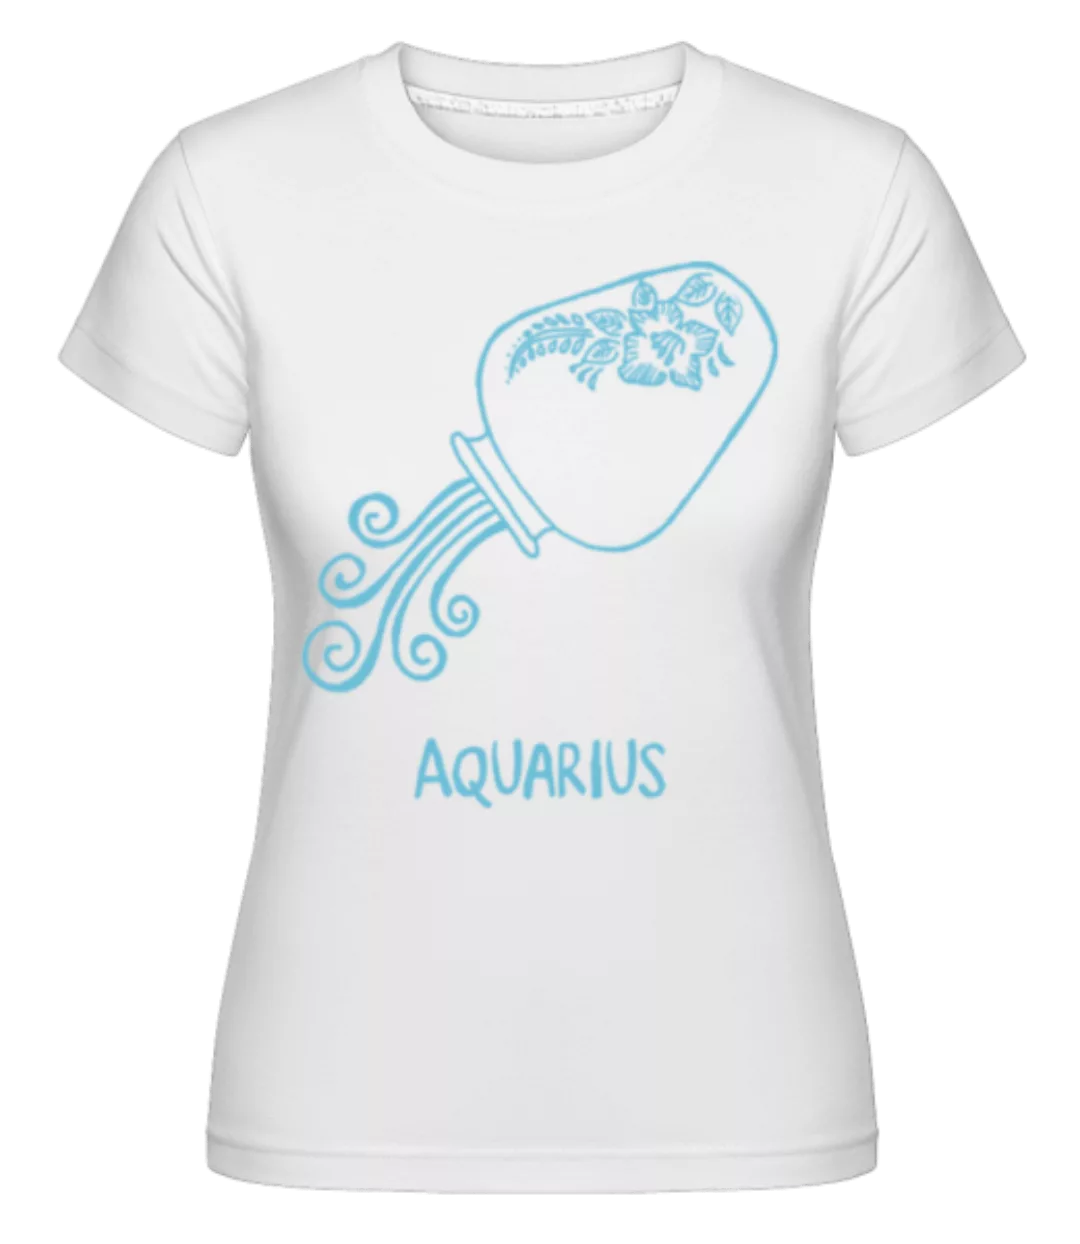 Scribble Style Zodiac Sign Aquarius · Shirtinator Frauen T-Shirt günstig online kaufen